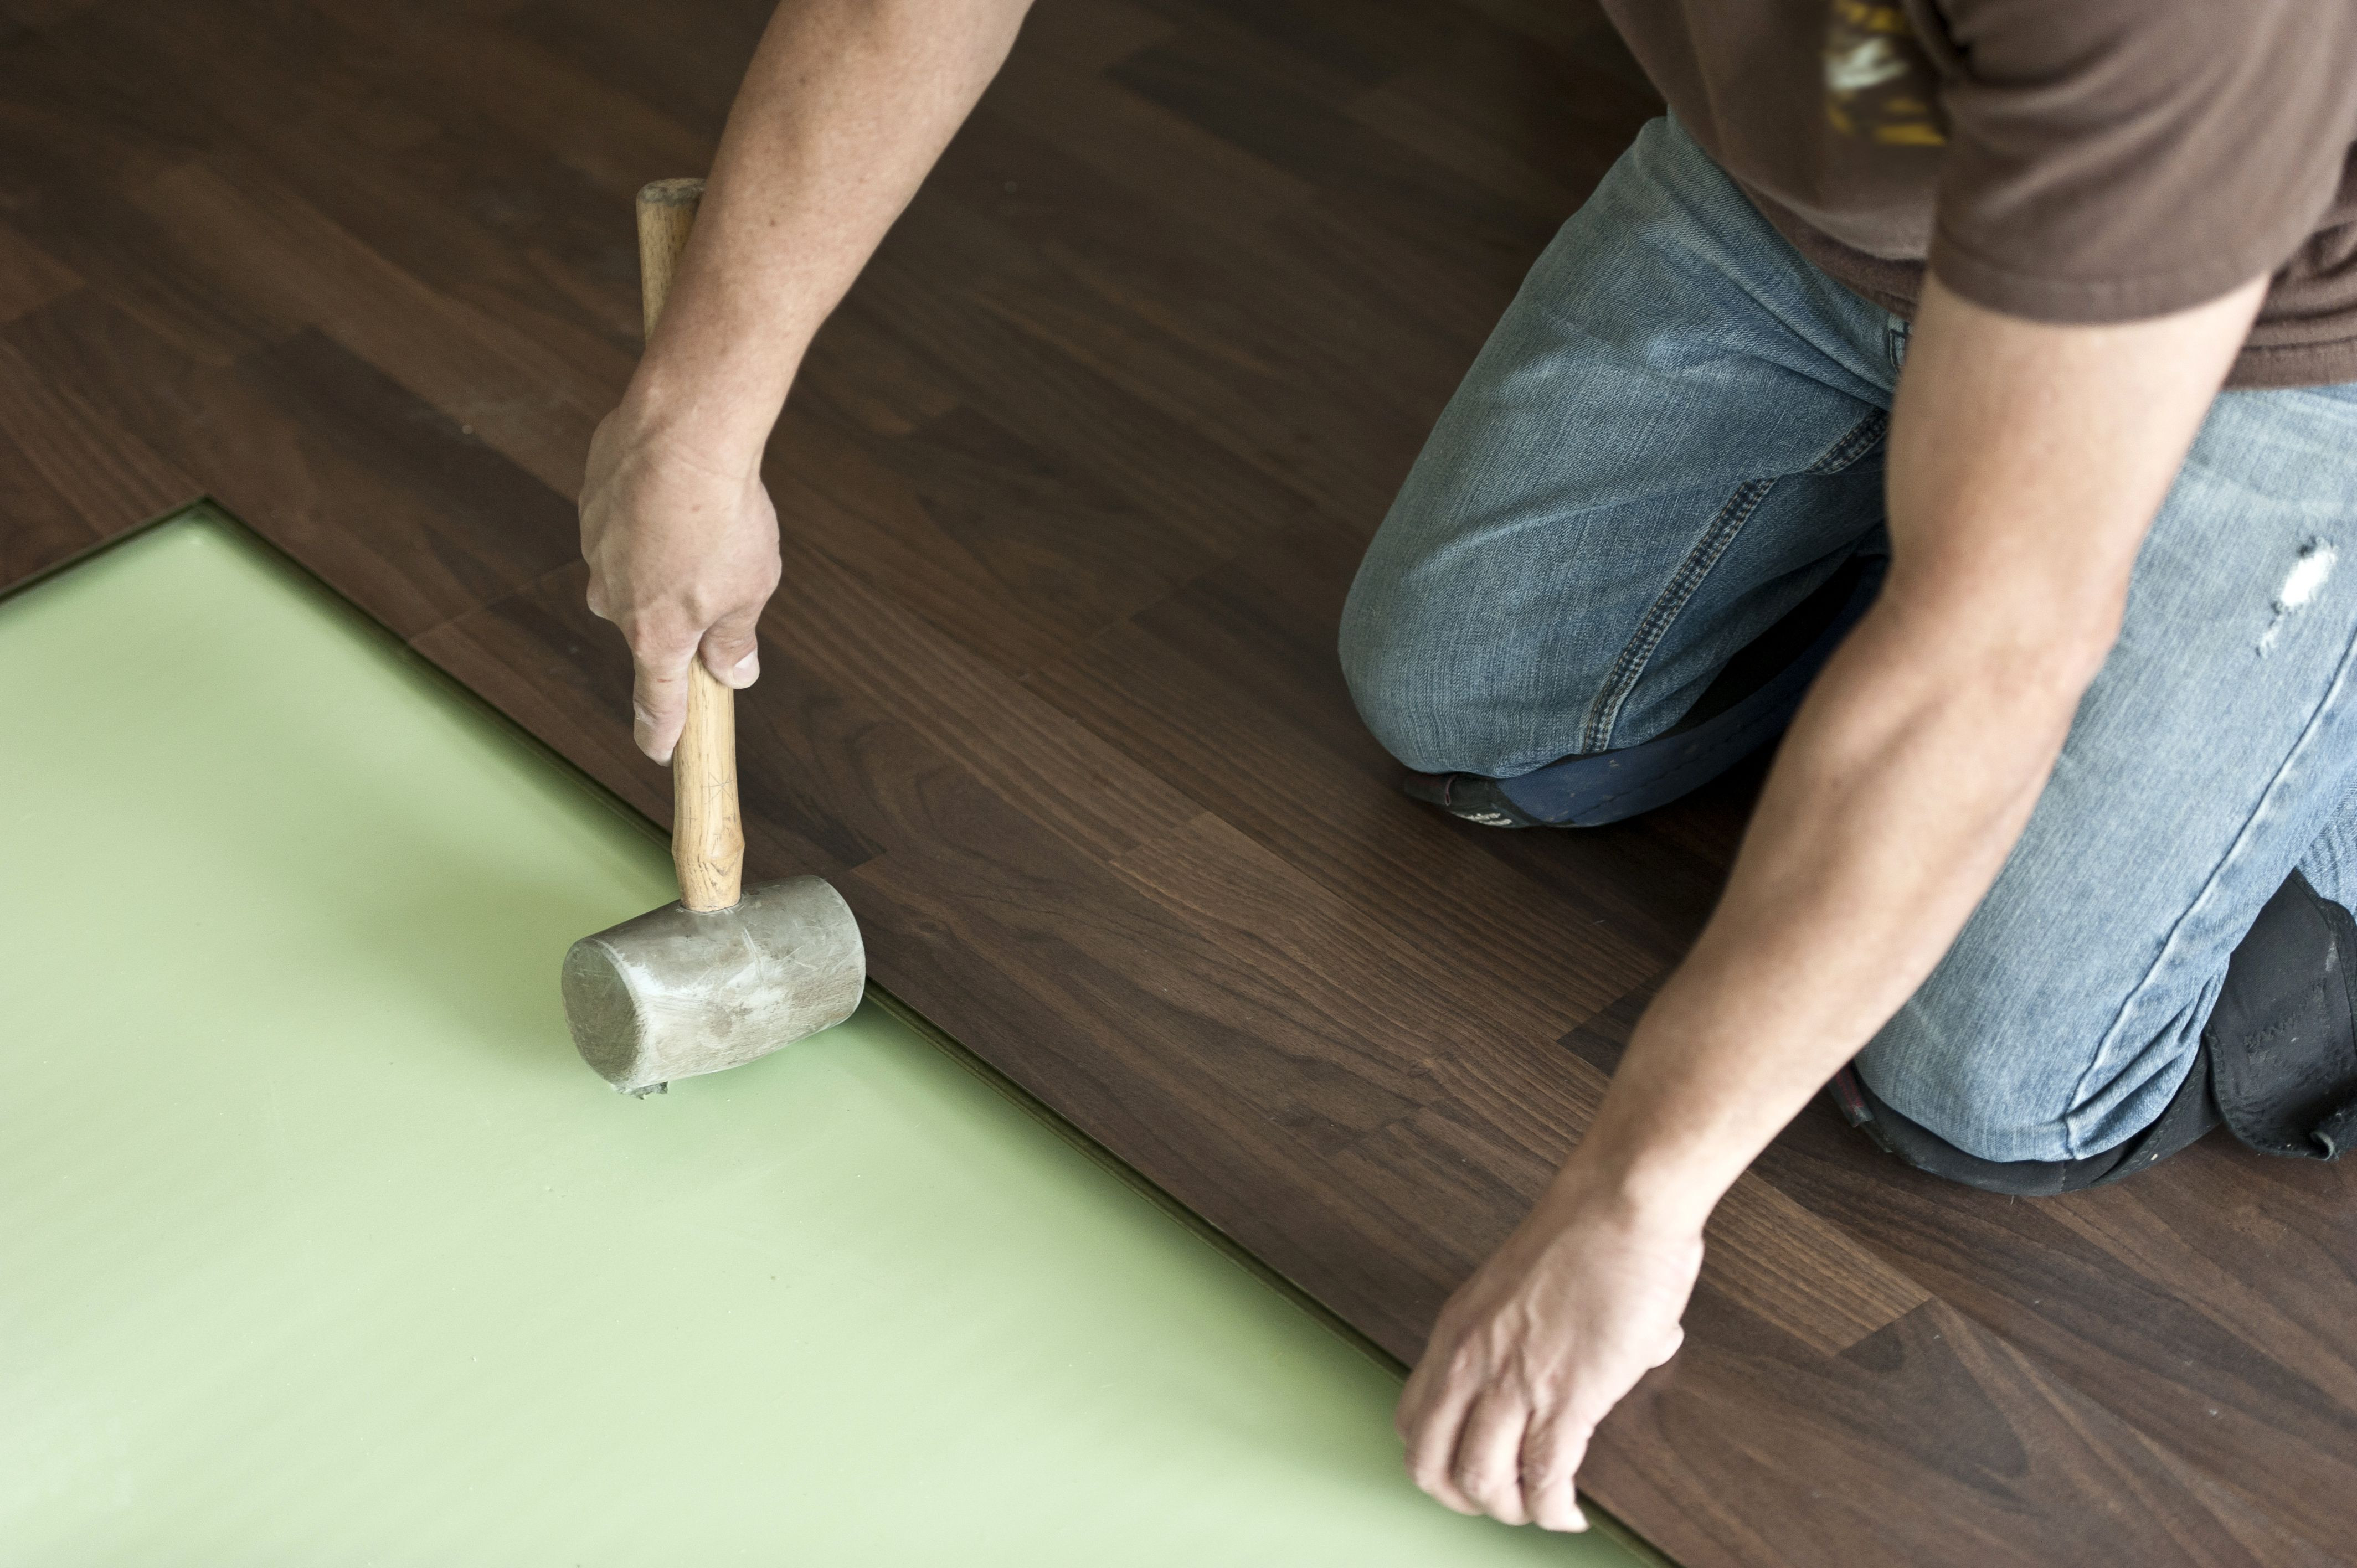 hardwood floor underlayment options of can a foam pad be use under solid hardwood flooring inside installing hardwood floor 155149312 57e967d45f9b586c35ade84a